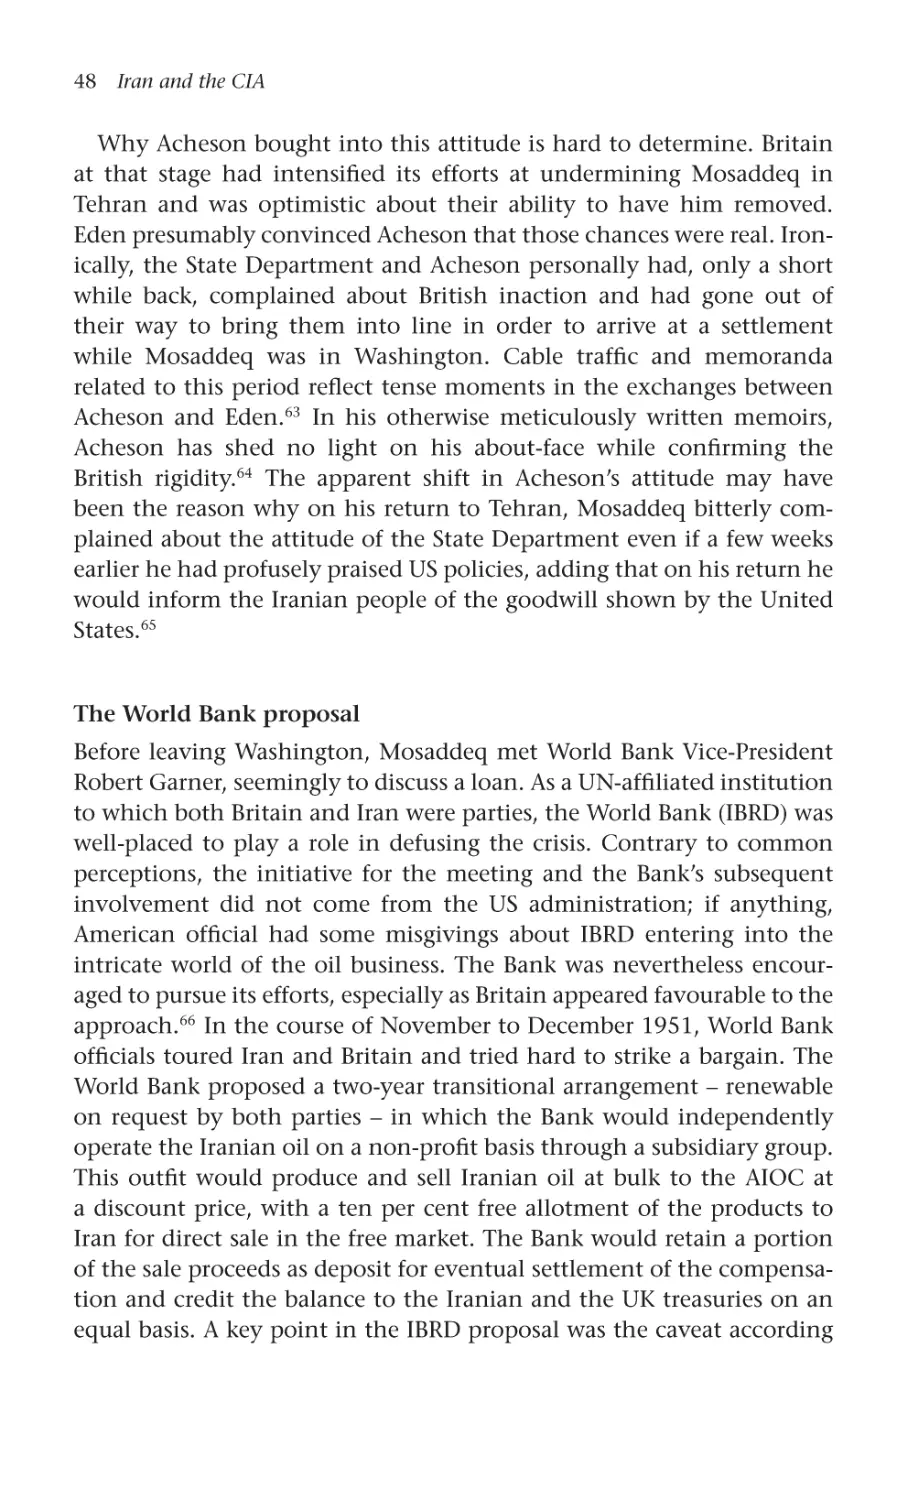 The World Bank proposal